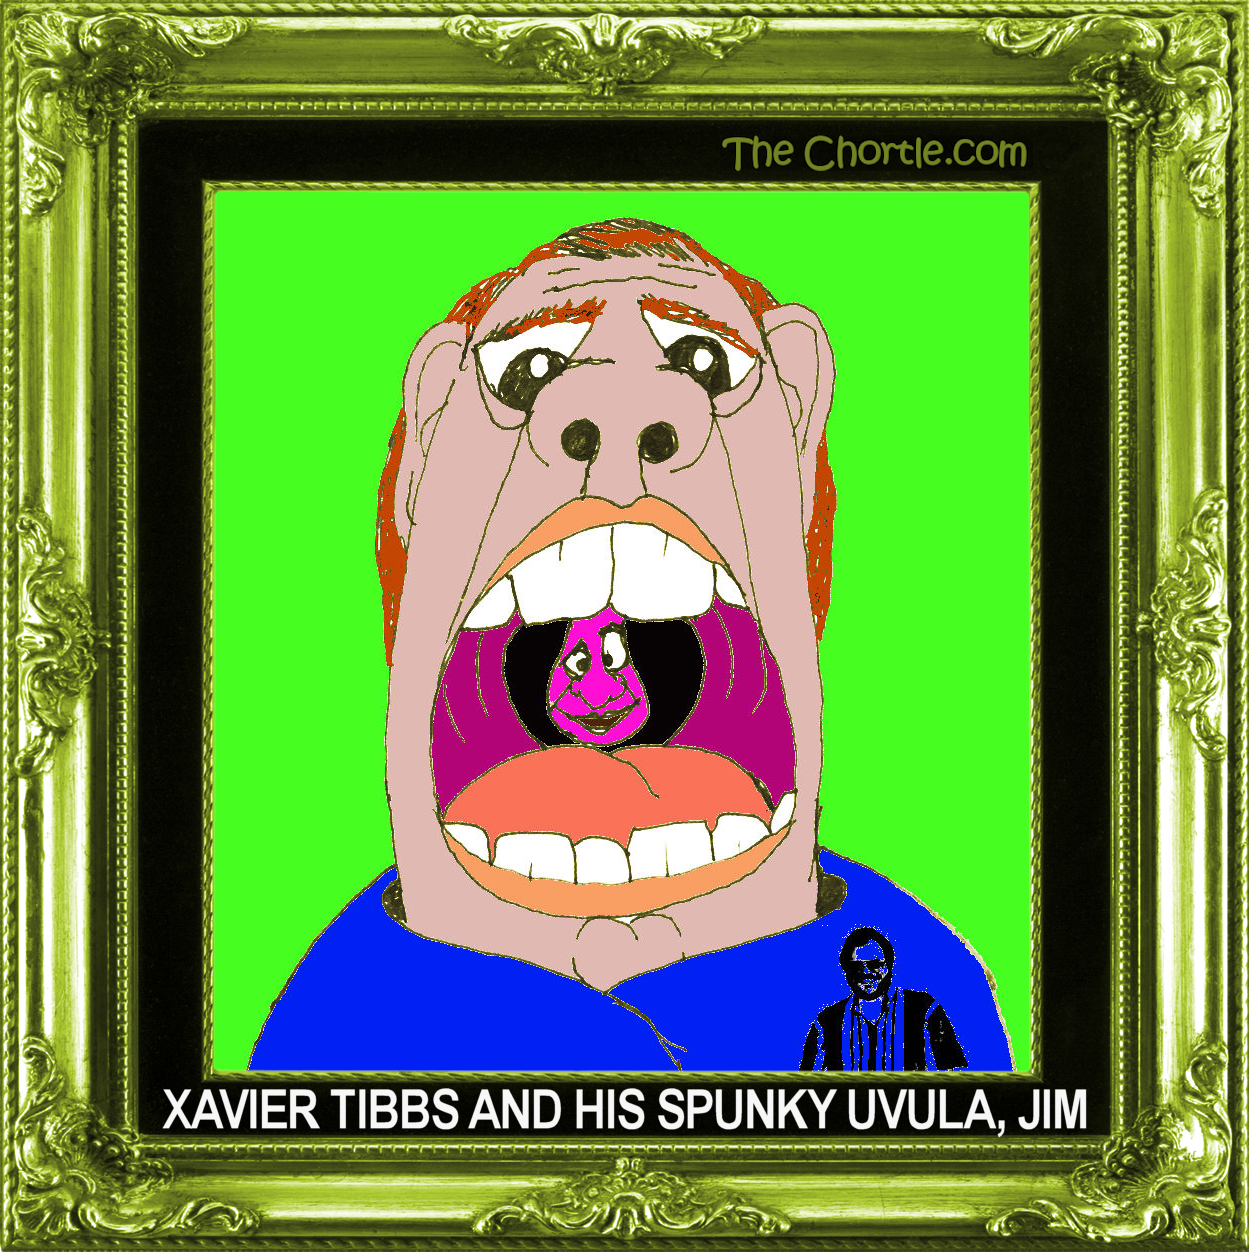 Xavier Tibbs and his spunky uvula, Jim.